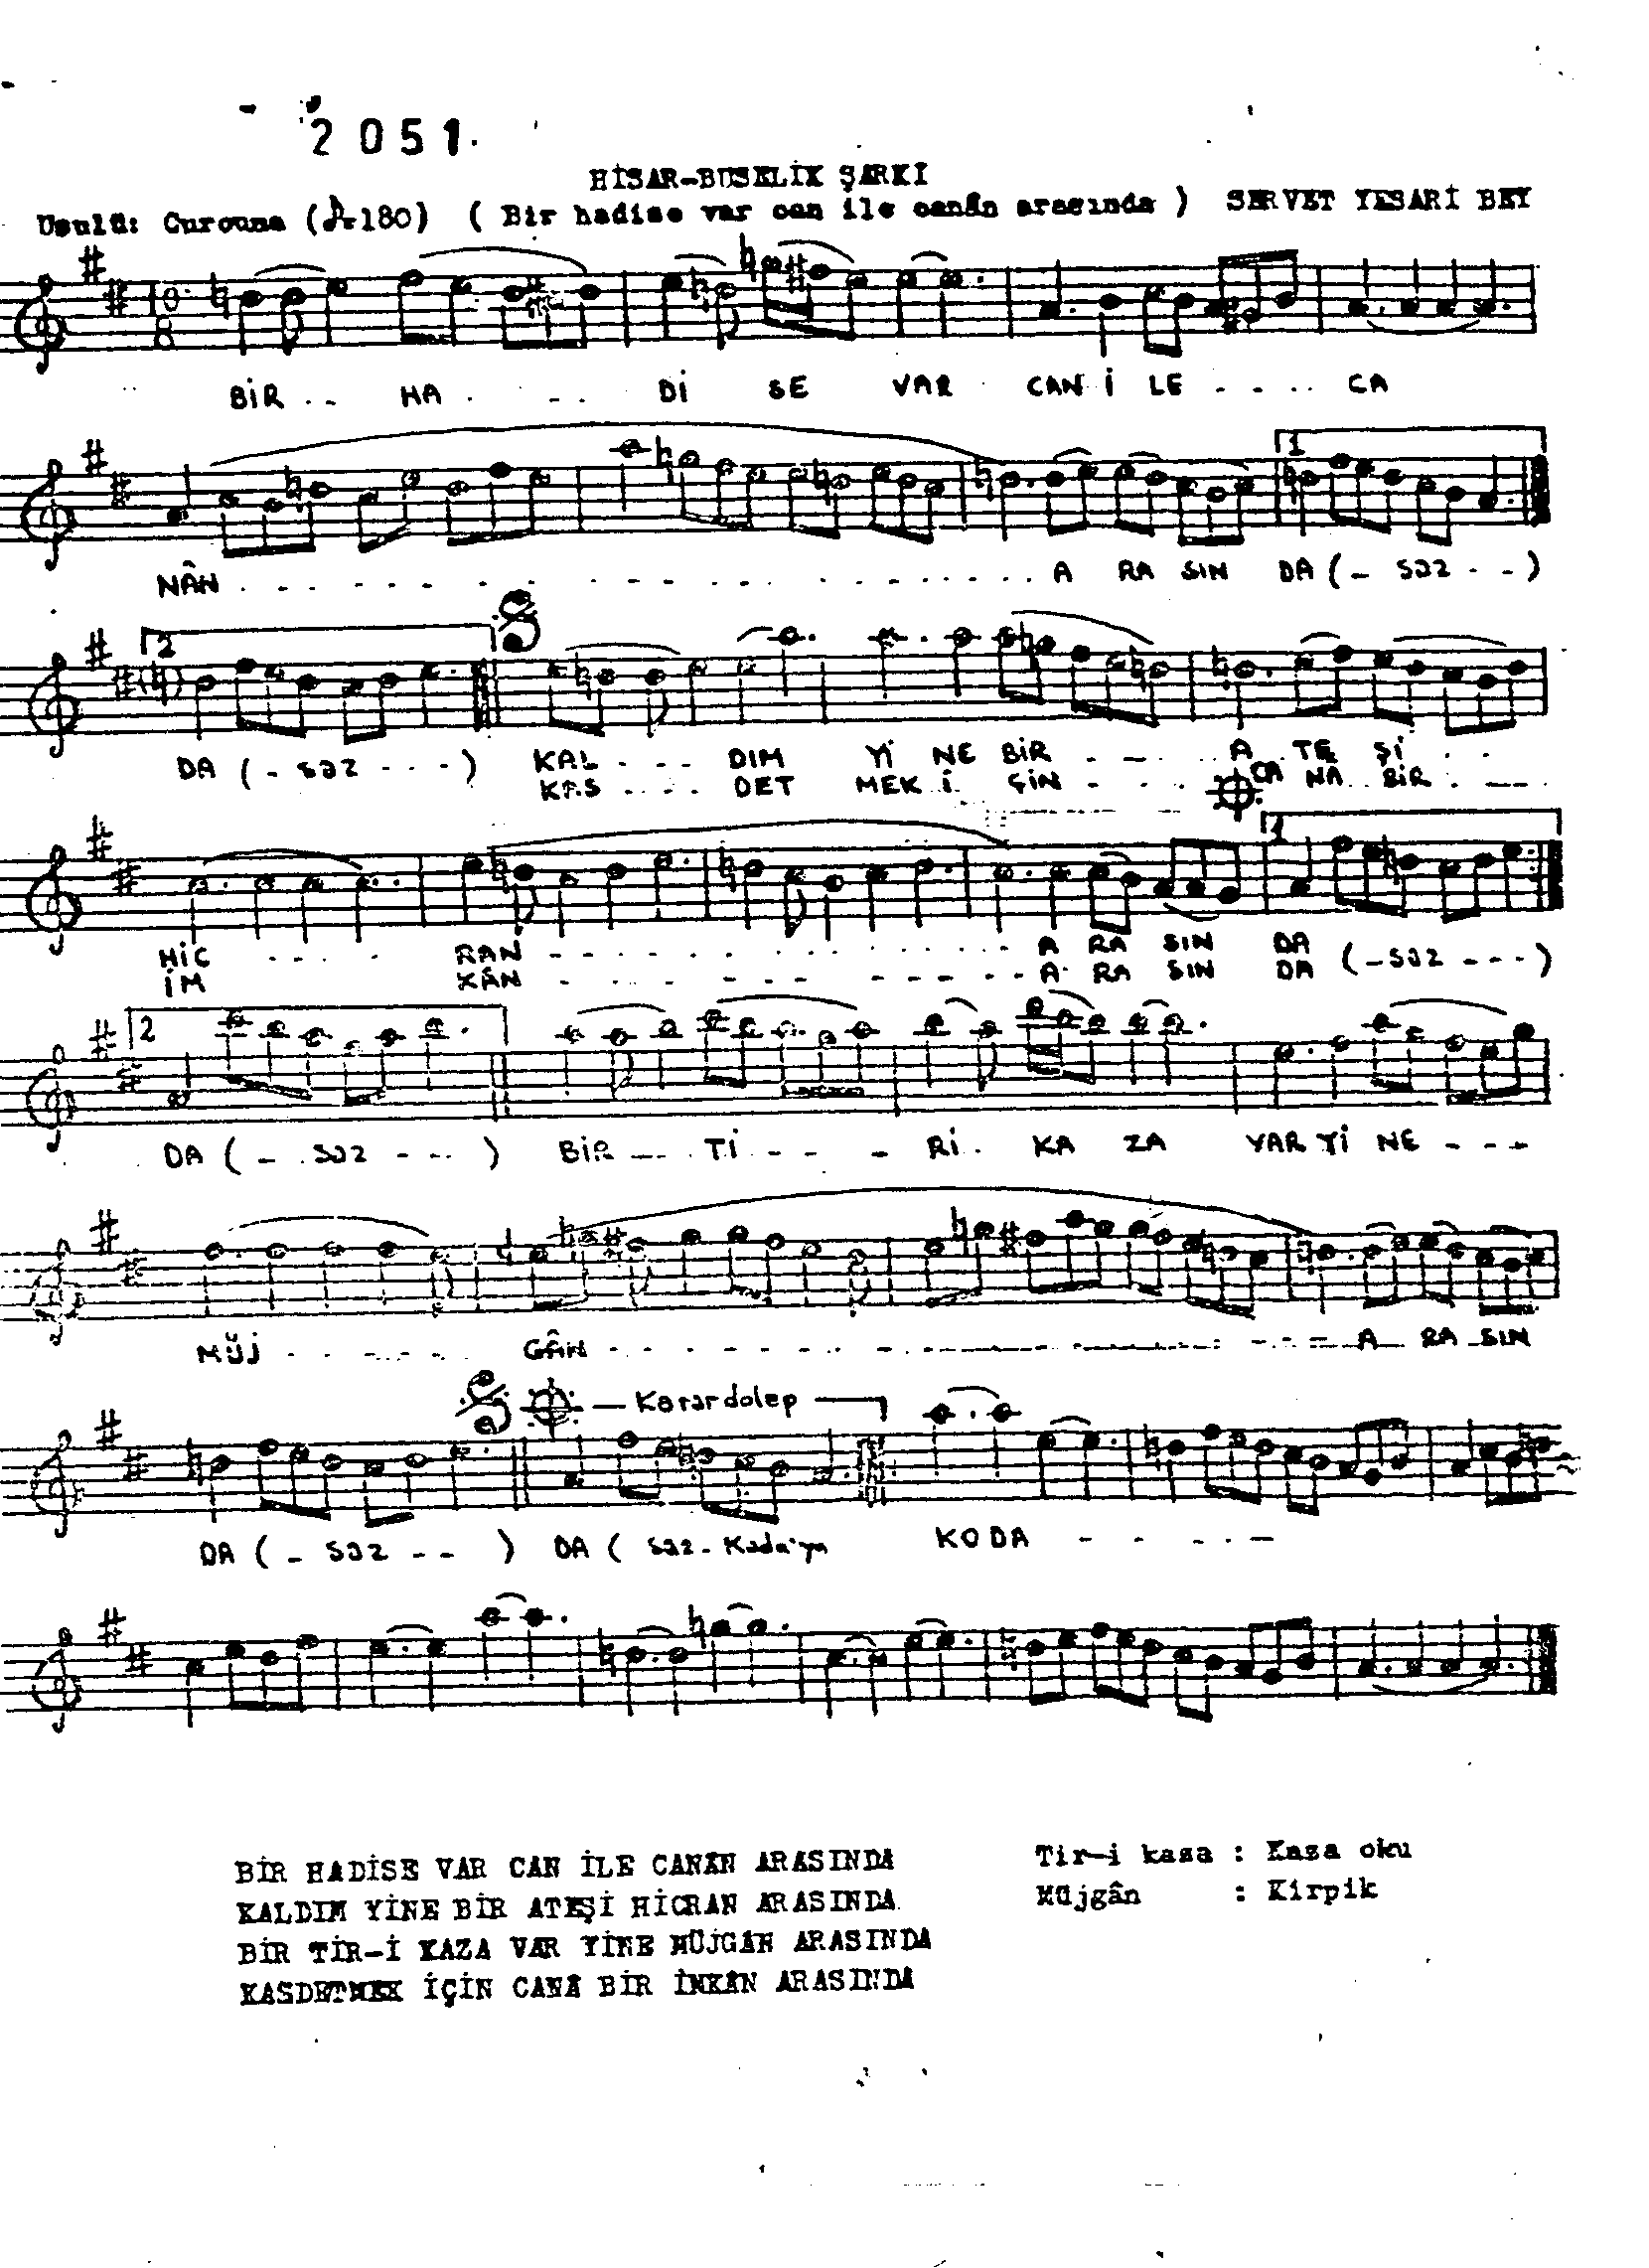 Hisâr-Bûselik - Şarkı - Servet Yesârî Bey - Sayfa 1